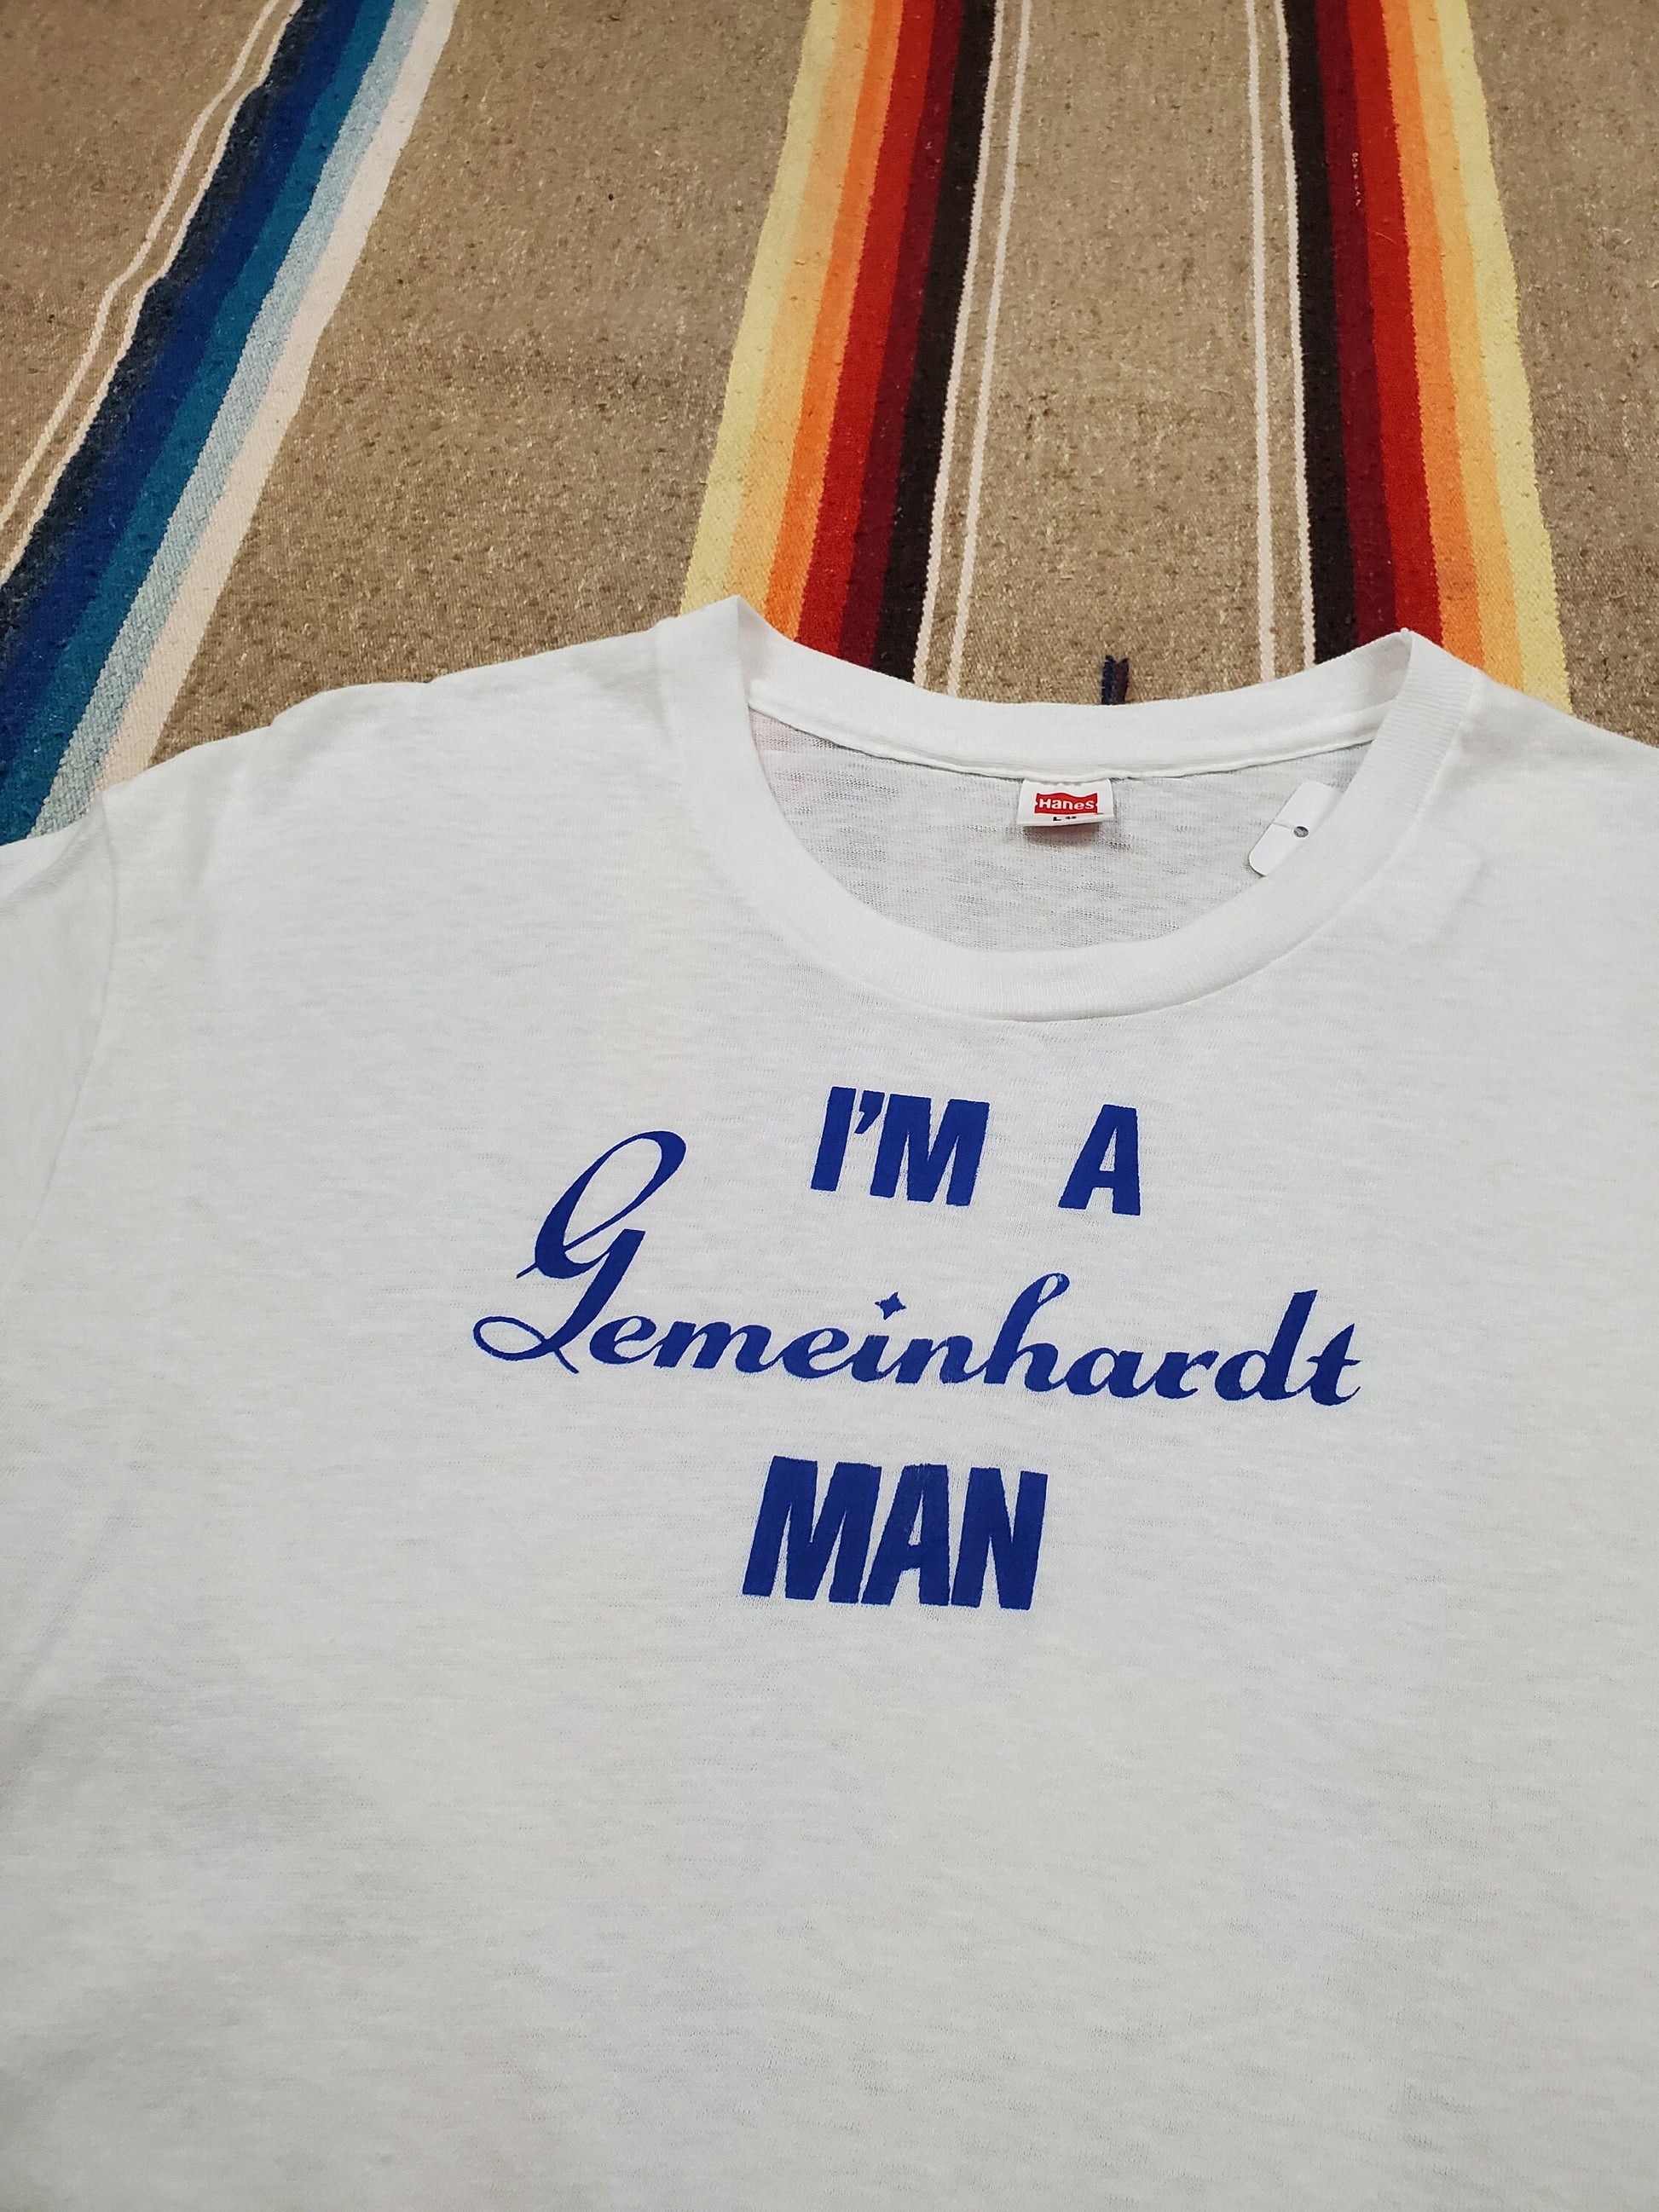 1970s Hanes I'm a Gemeinhardt Man Musical Instruments T-Shirt Size M